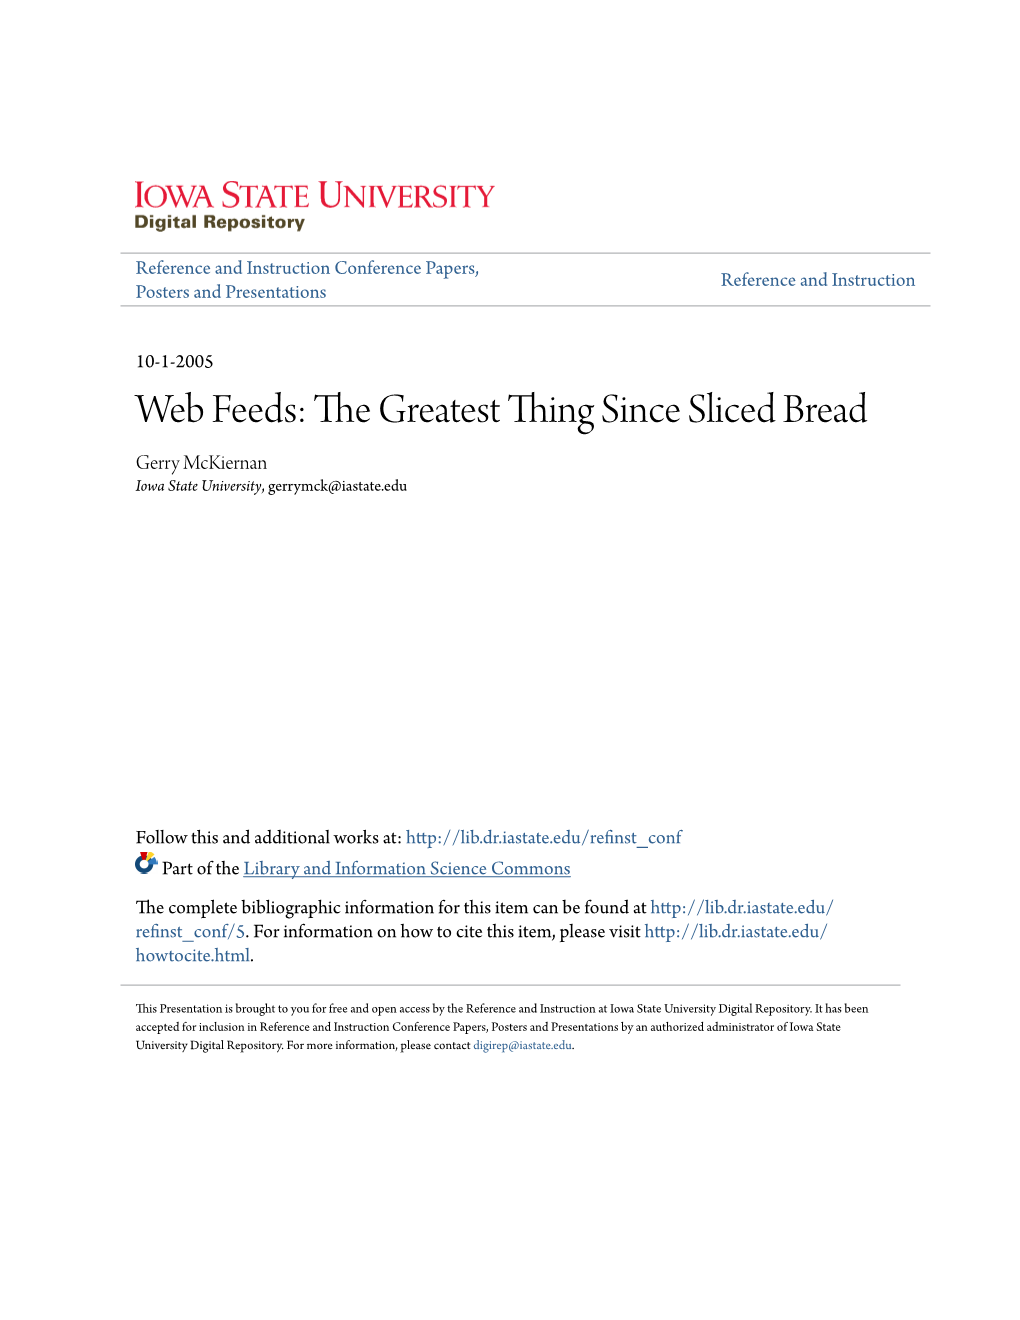 Web Feeds: the Greatest Thing Since Sliced Bread Gerry Mckiernan Iowa State University, Gerrymck@Iastate.Edu